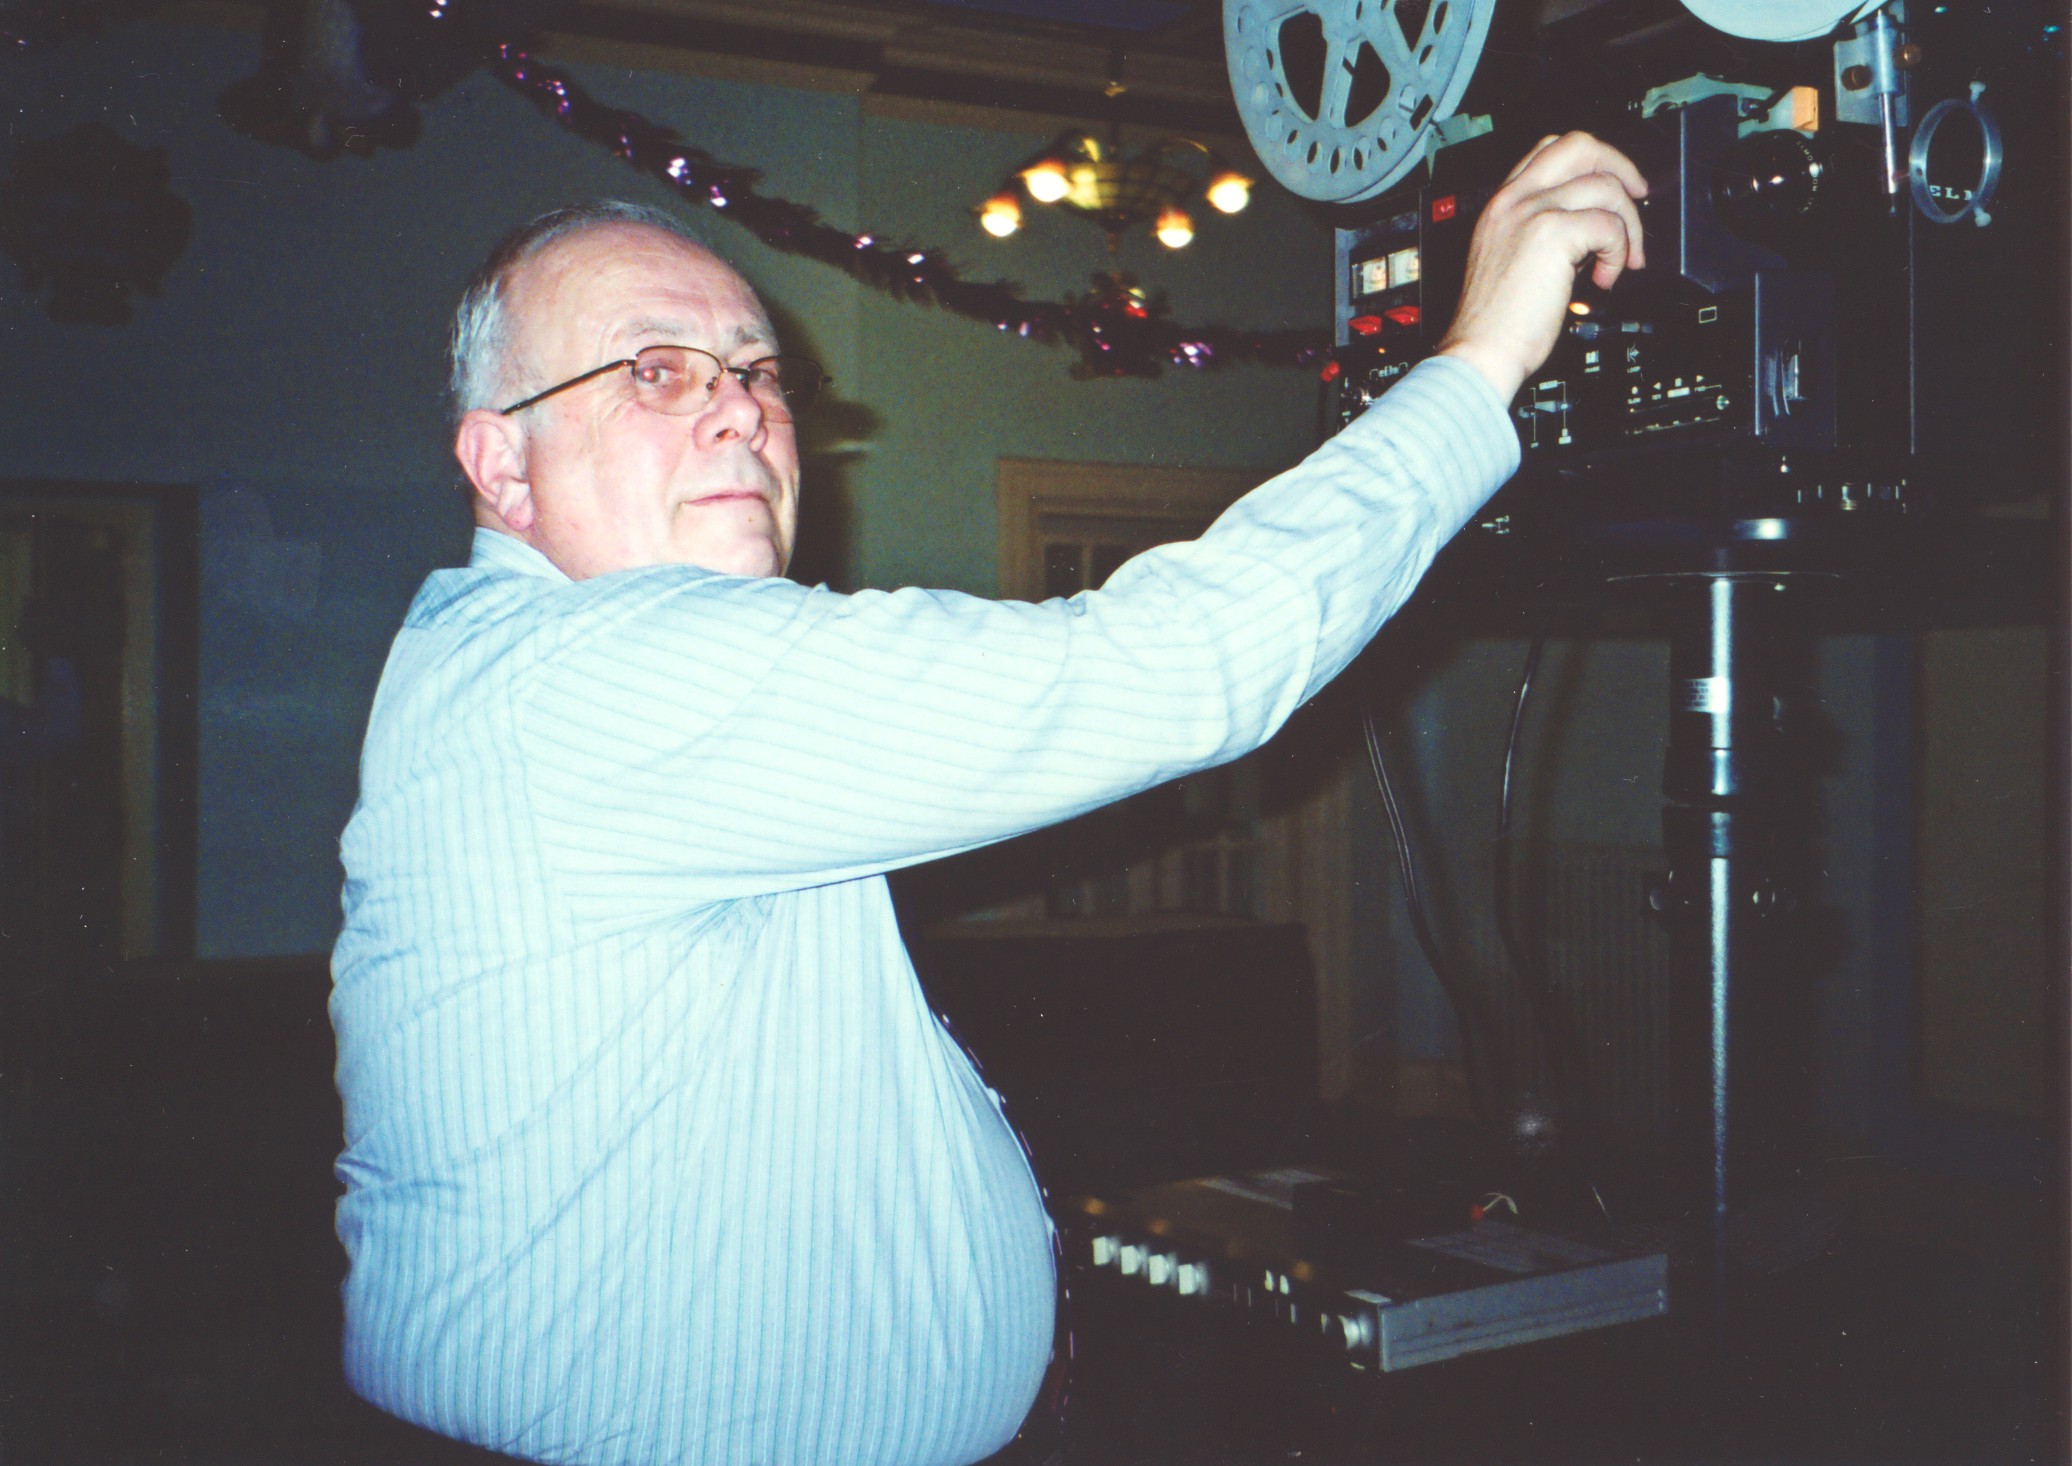 2005 Convention Dinner projectionist Bob Nicholls